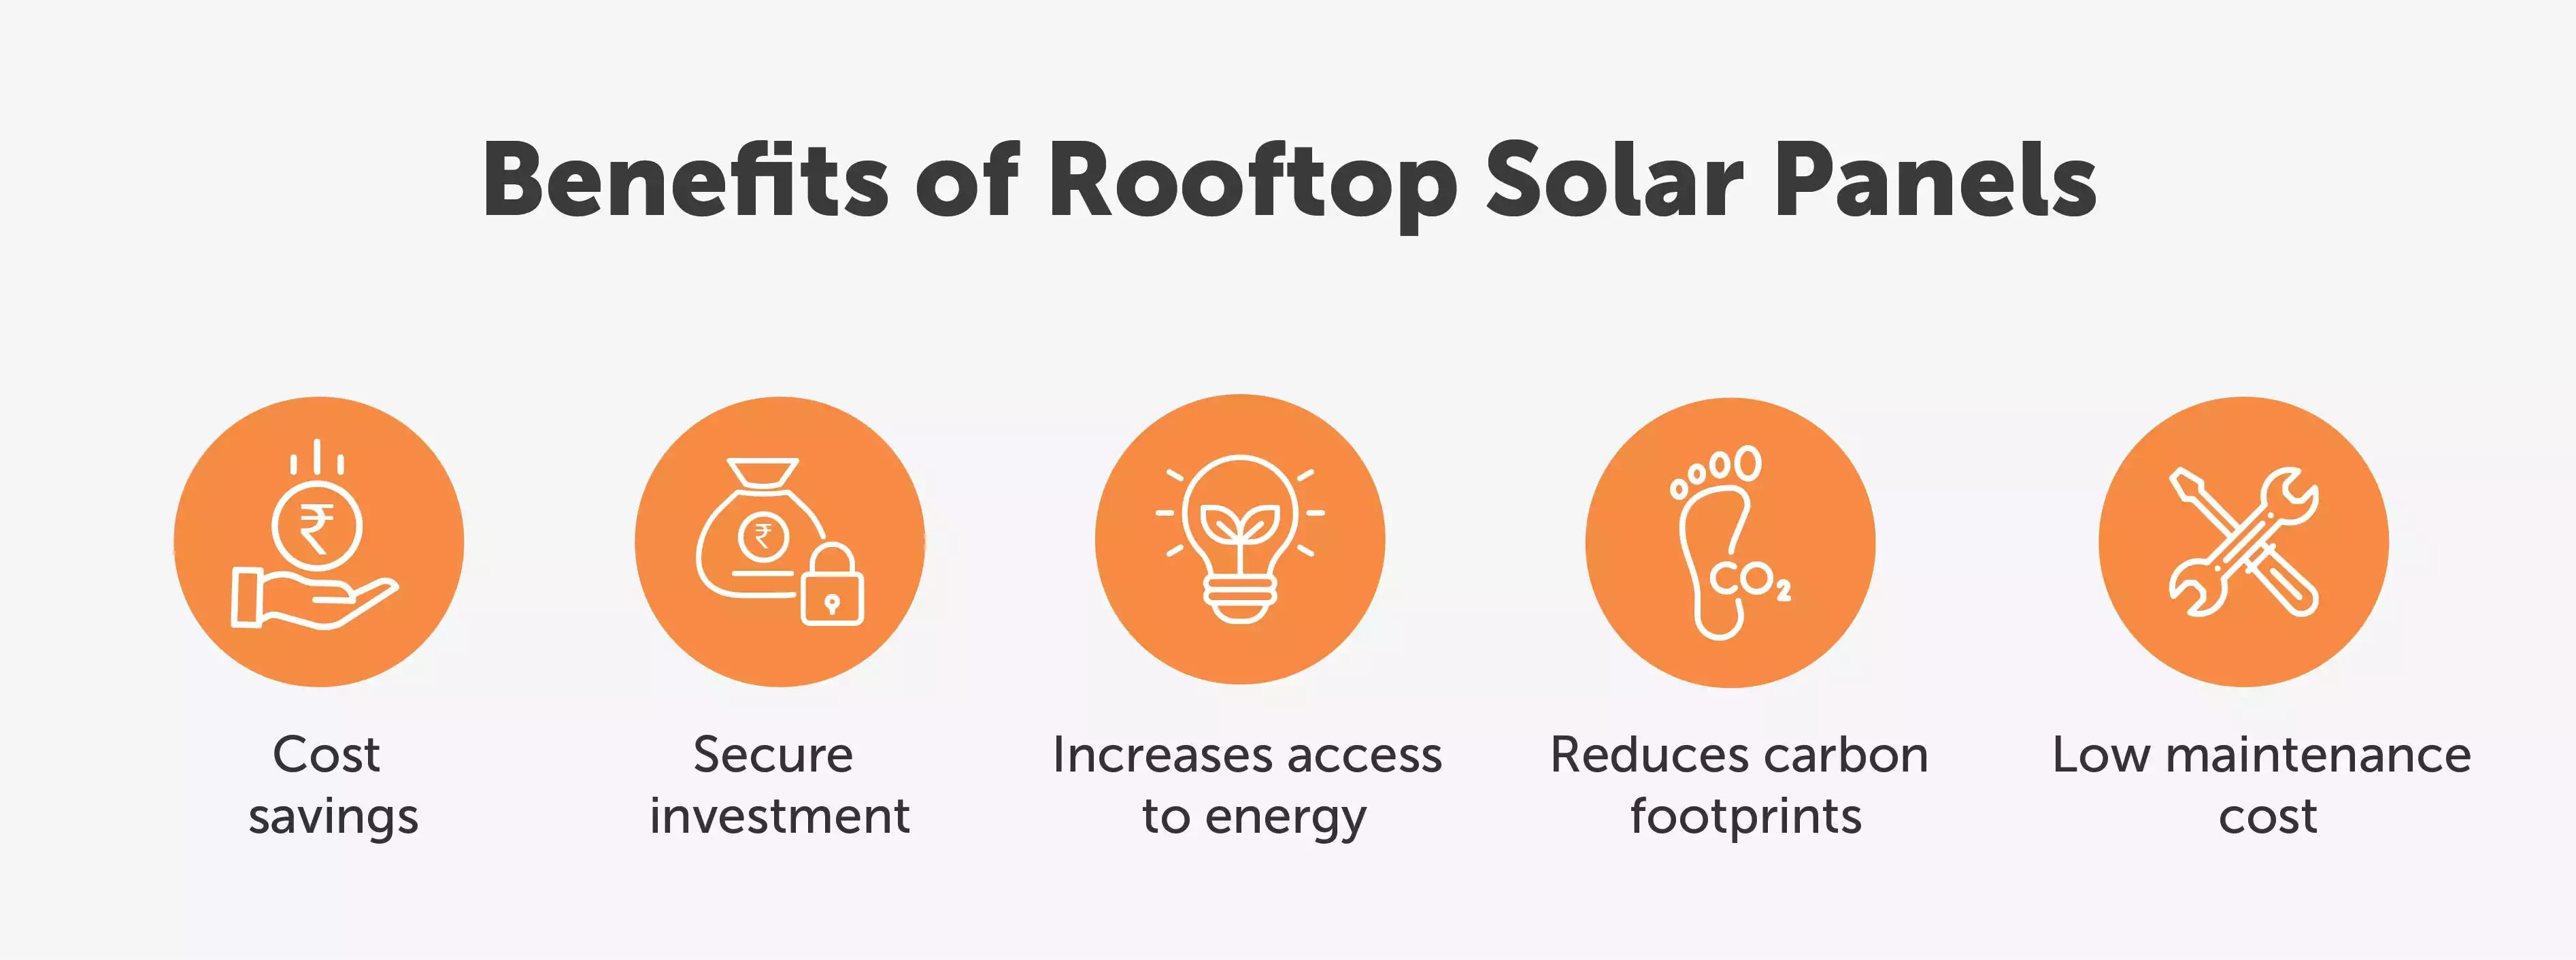 Benefits of Rooftop Solar Panels